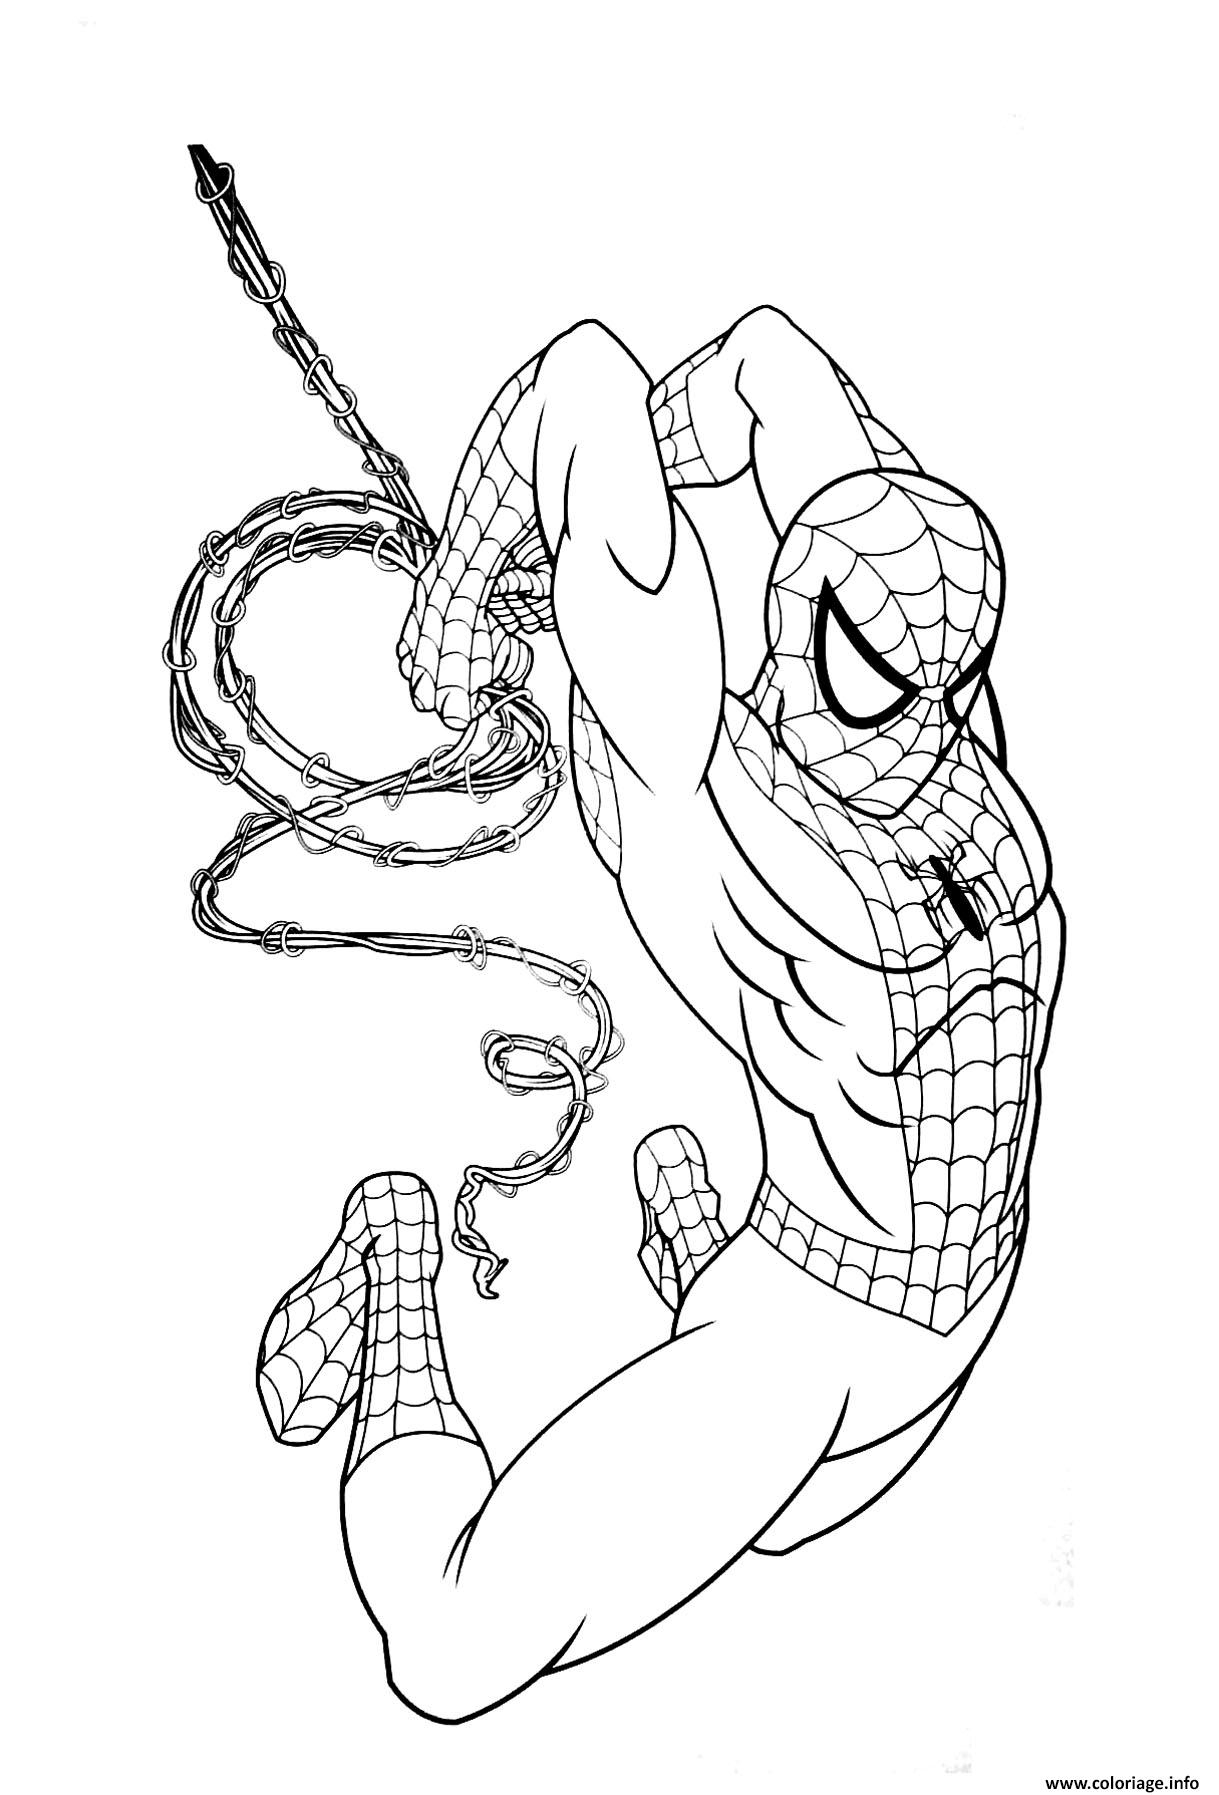 Coloriage Garcon Super Heros Marvel Spiderman Dessin Super Heros À Imprimer intérieur Dessin Spiderman À Colorier